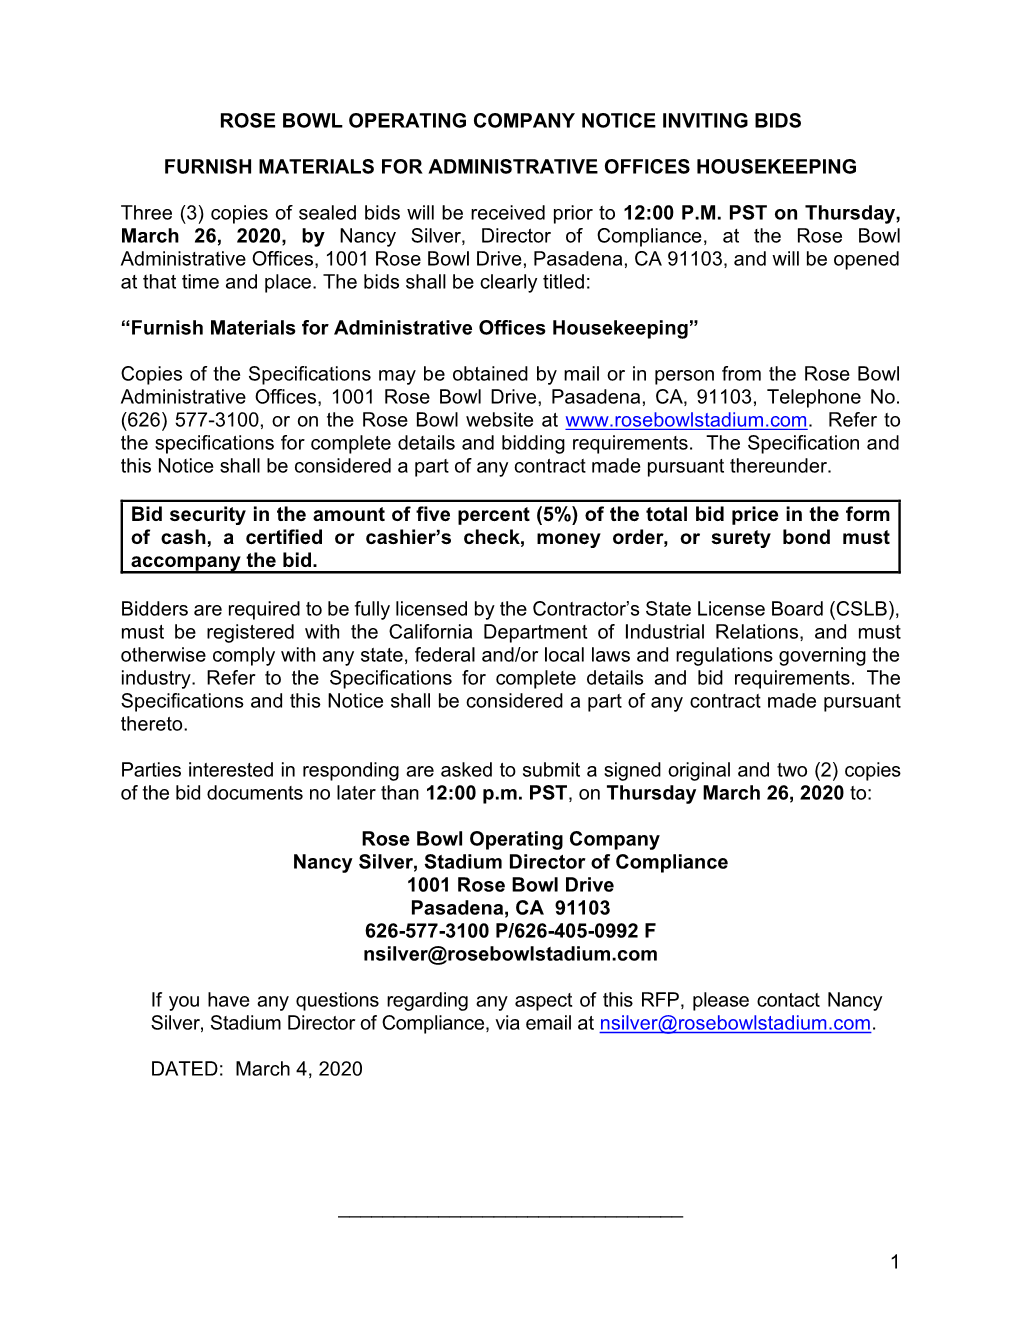 Rose Bowl Stadium Administrative Offices Housekeeping Bid Documents